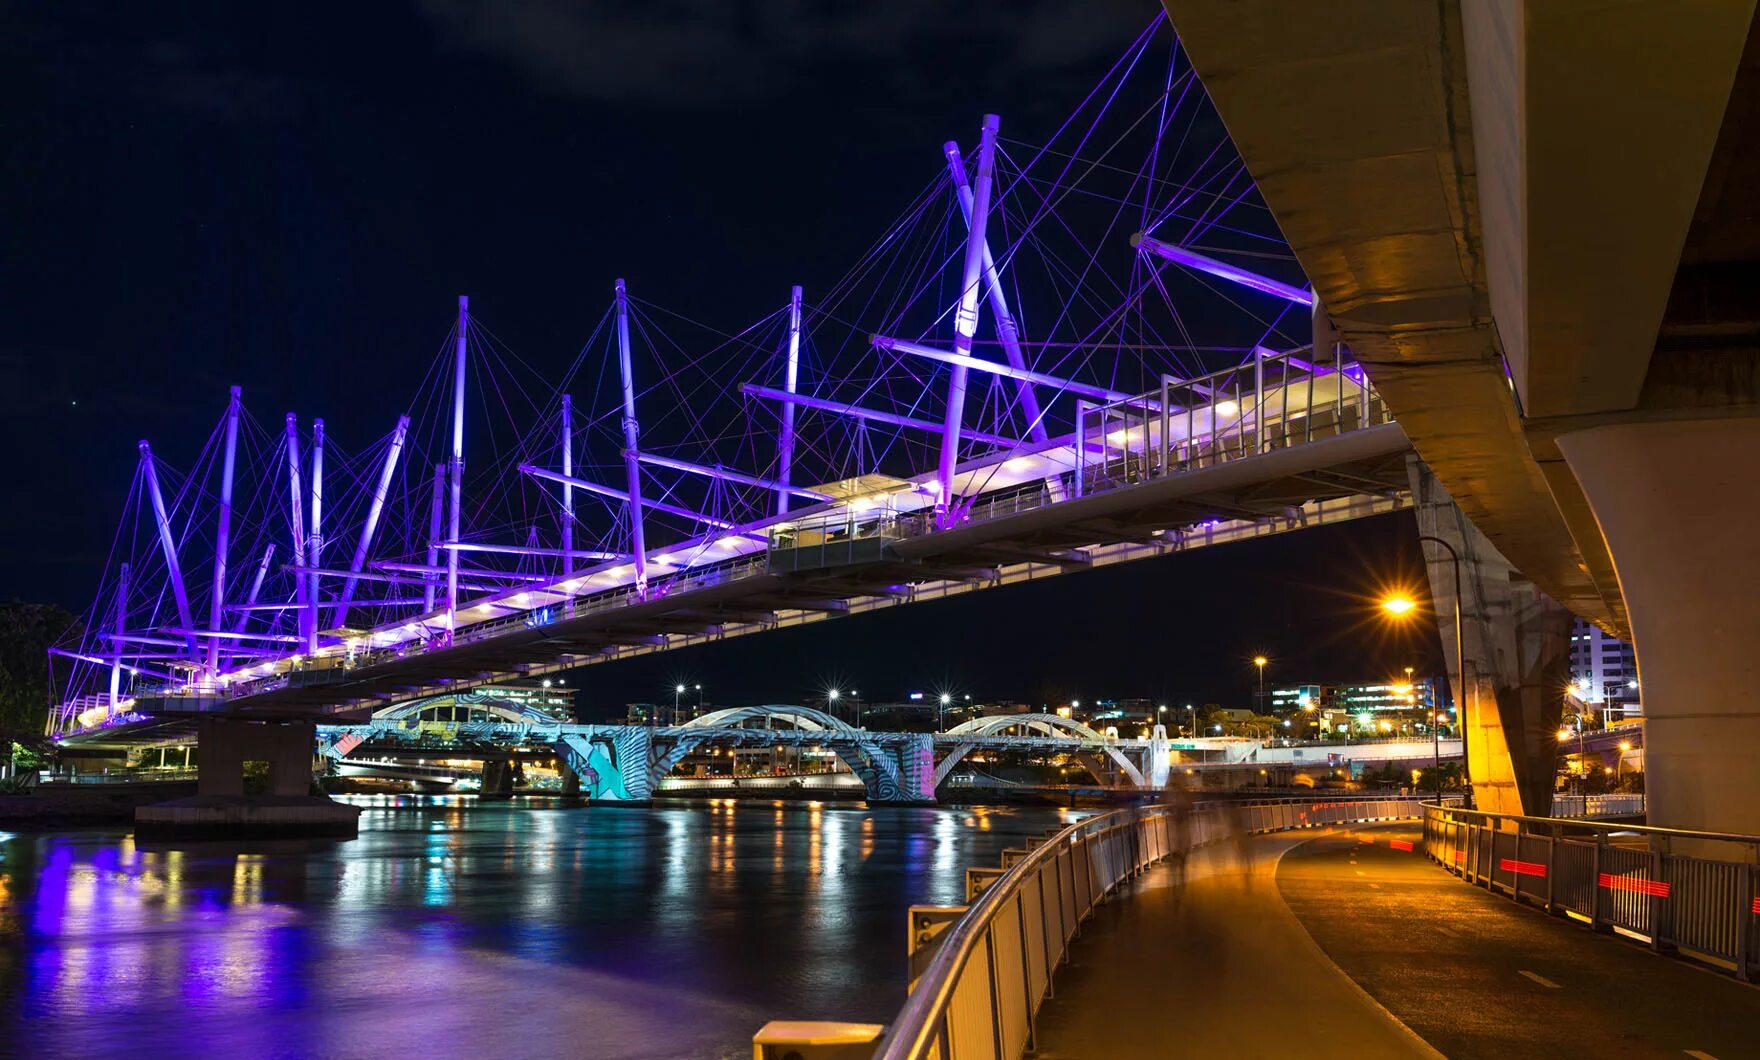 G most. Мост Тейлор бридж город. Подсветка моста. Архитектурная подсветка мостов. Светящийся мост в Москве.